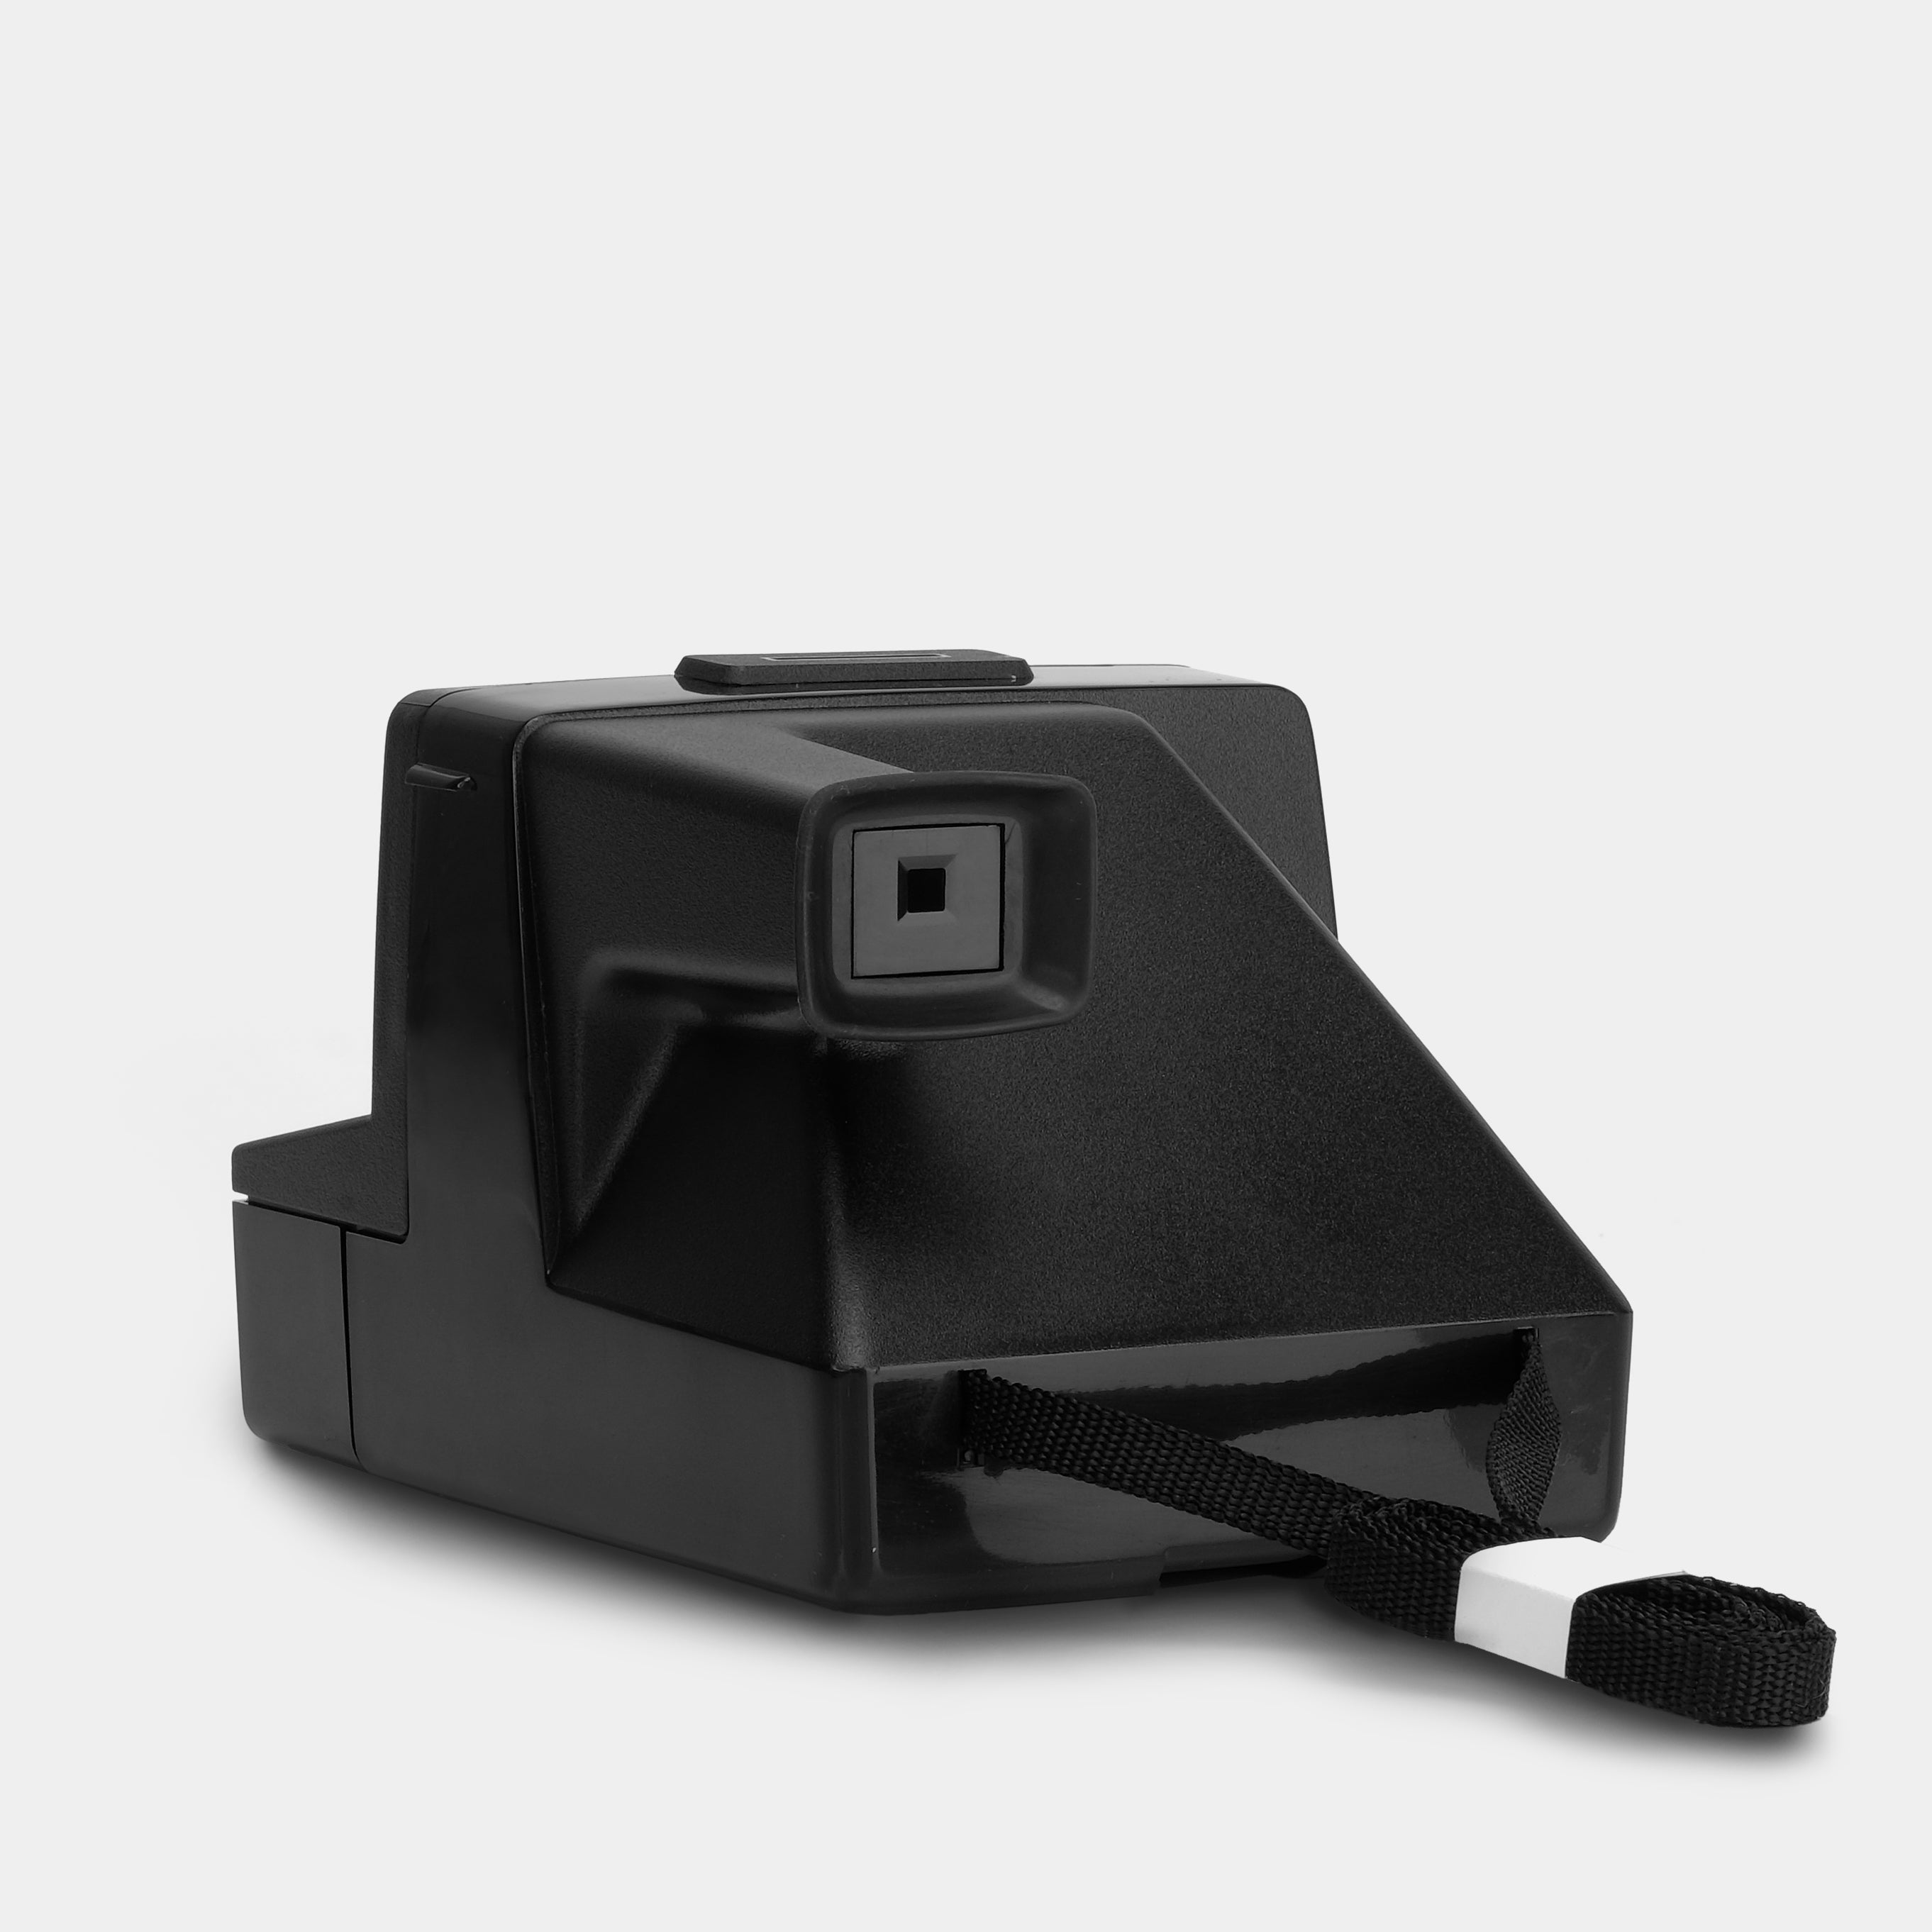 Polaroid SX-70 Rainbow Black Instant Film Camera